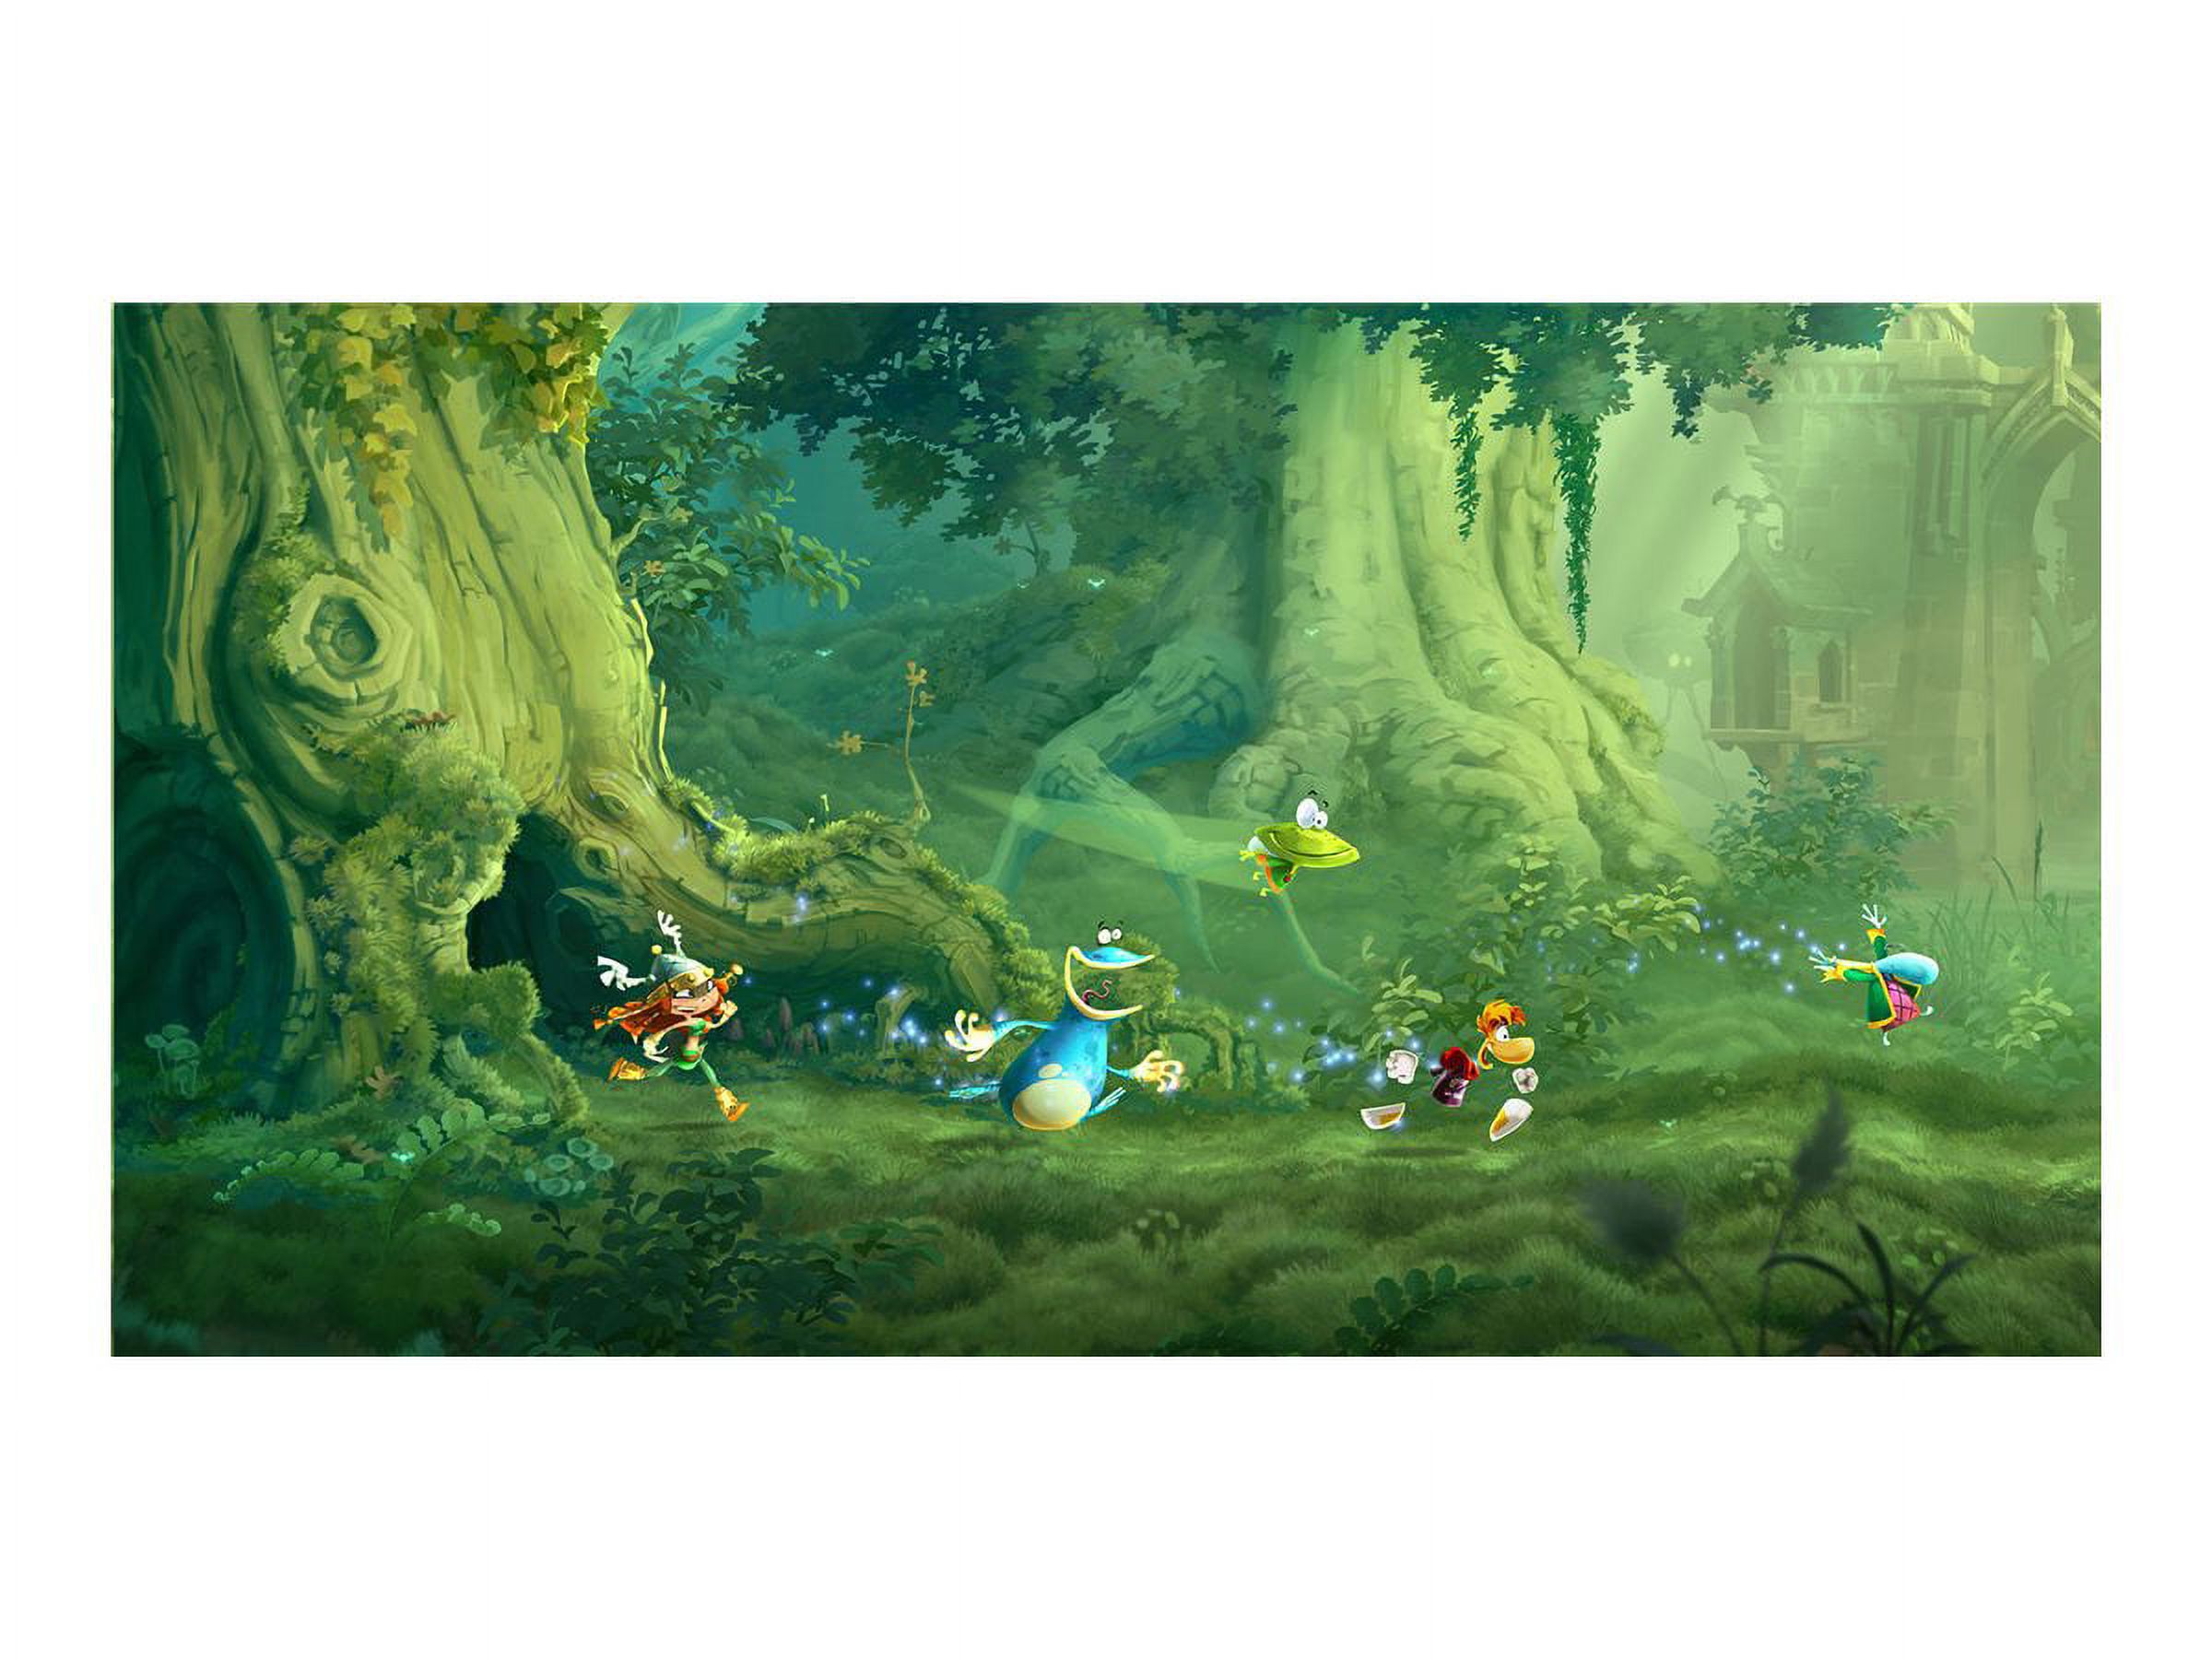 Ubisoft Rayman Legends Wii-U - image 3 of 7